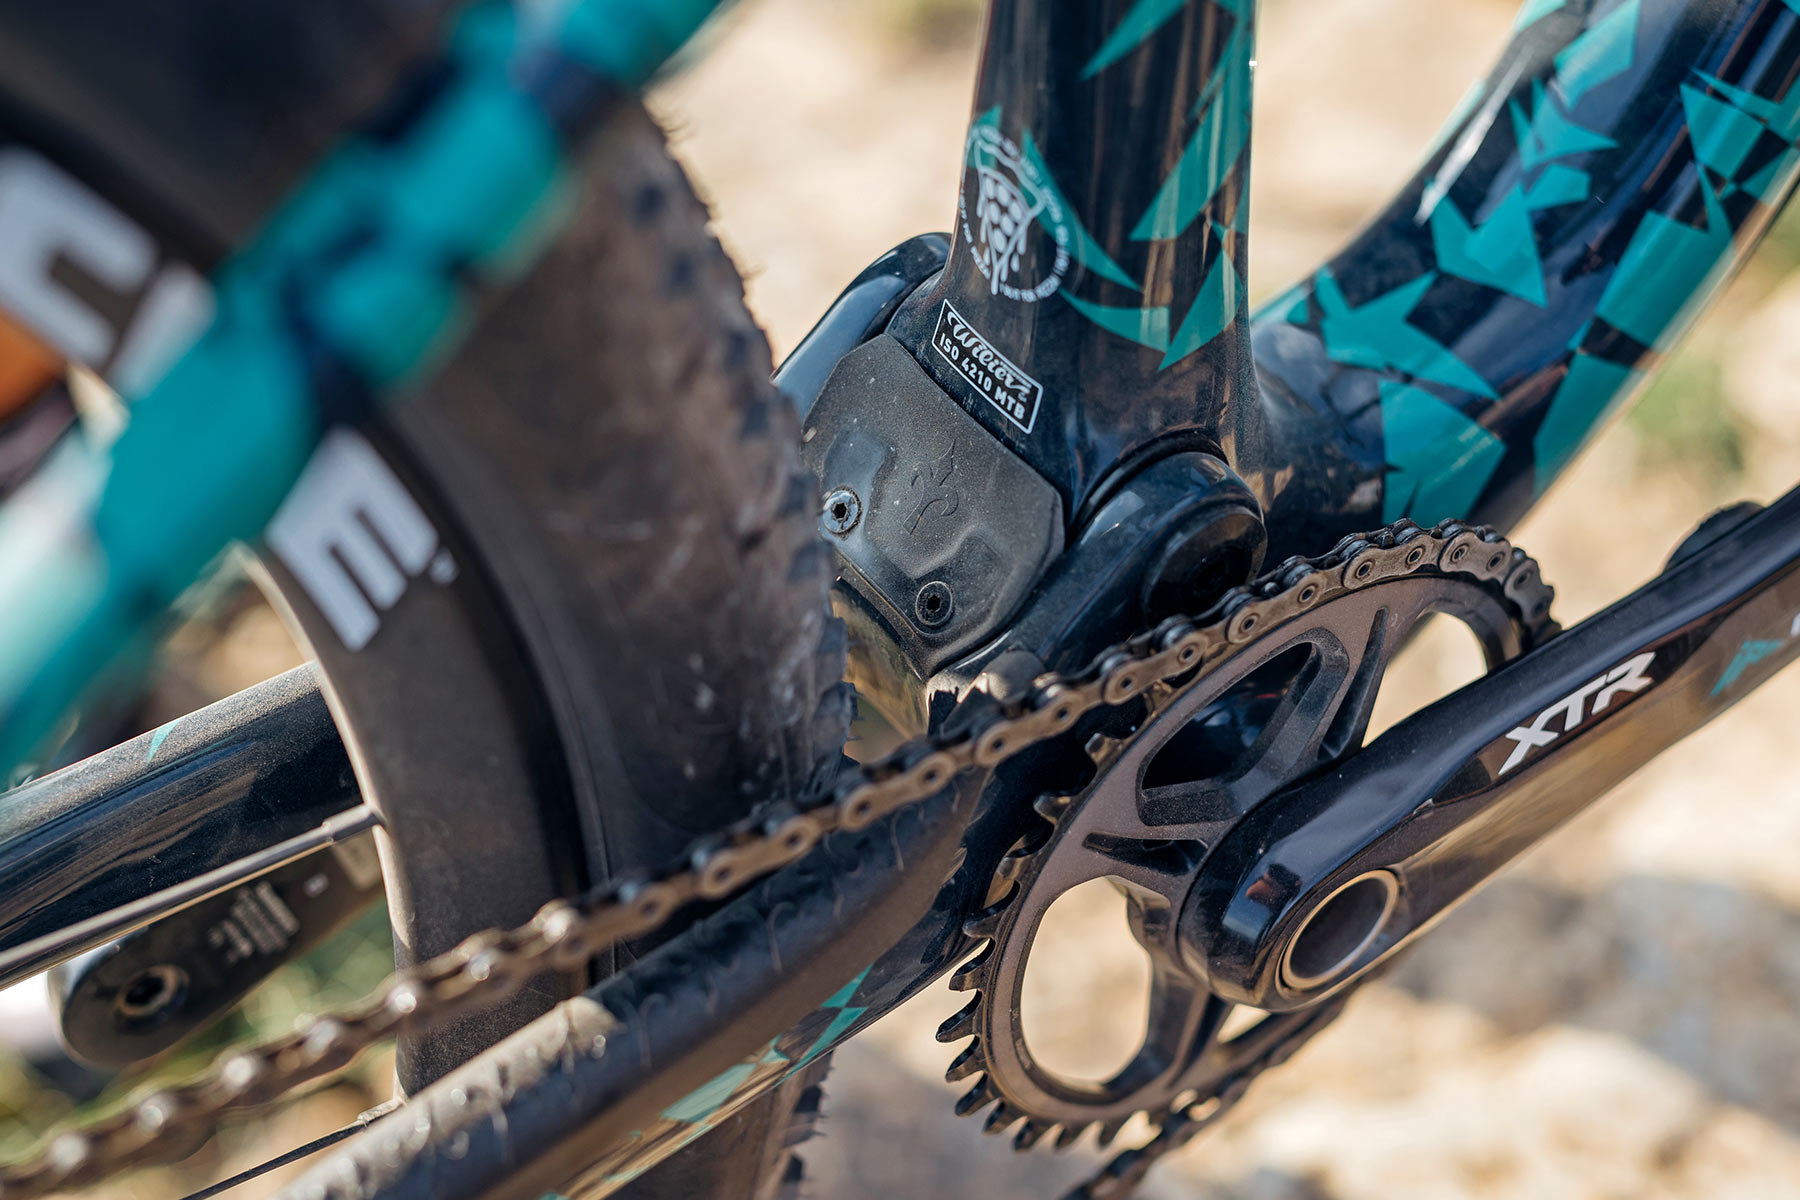 Wilier Urta Max SLR lightweight 120mm carbon XC race mountain bike, mud flap